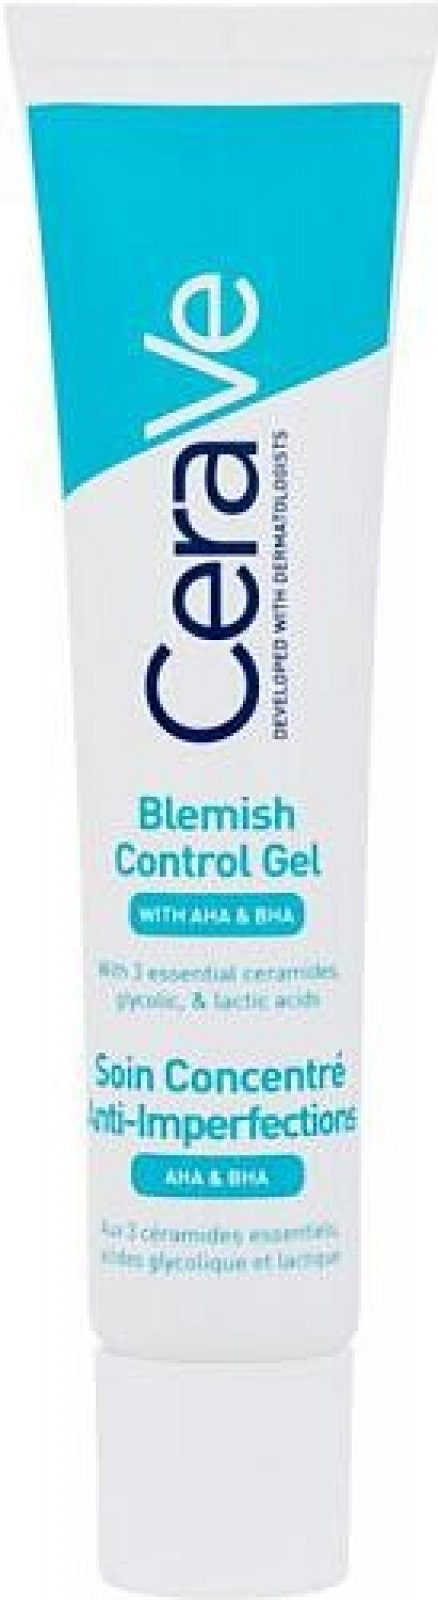 CeraVe, Blemish Control Gel, gel proti nedokonalostem pleti, 40 ml, bez krabičky